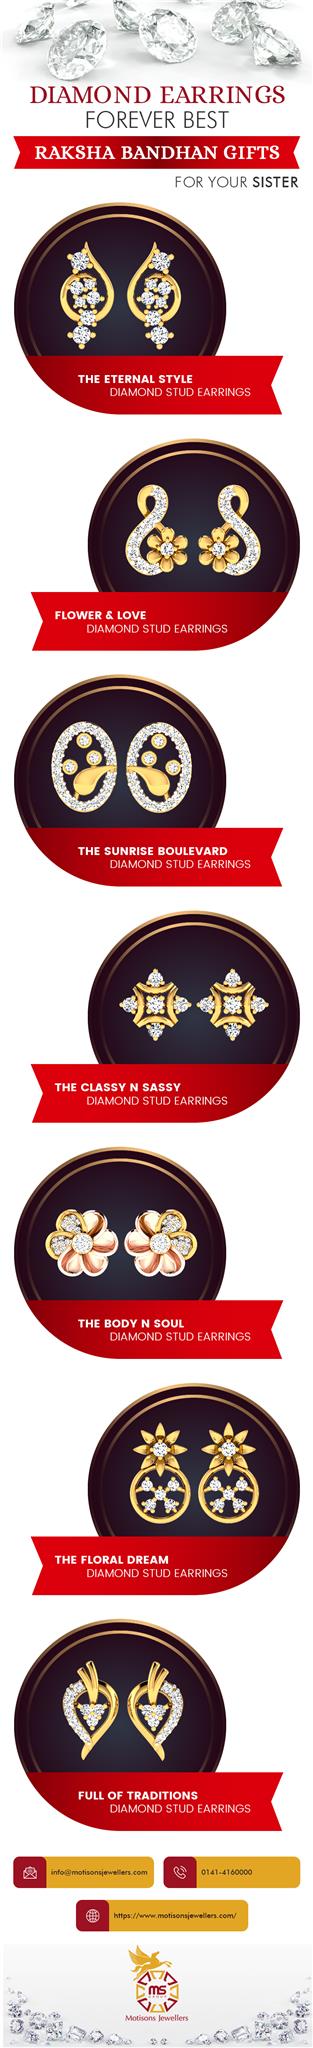 Diamond-Earrings-Best-Raksha-Bandhan-Gifts-for-Sisters.jpg